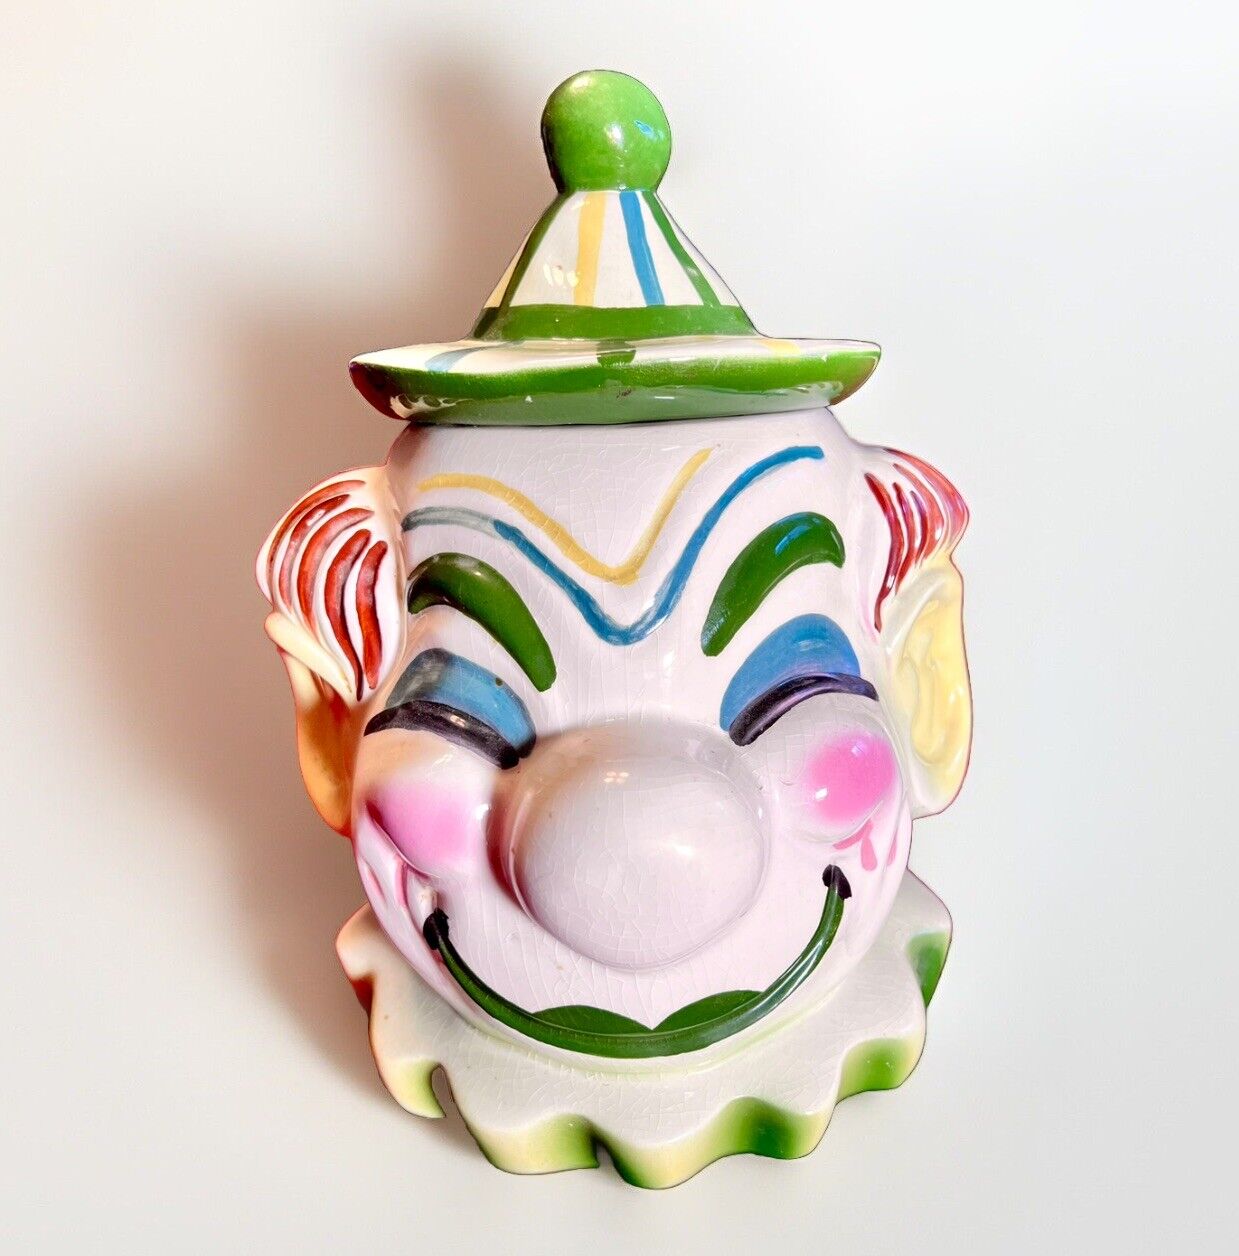 Sierra Vista Ceramic Clown Cookie Jar Pottery white nose Vintage 1950’s